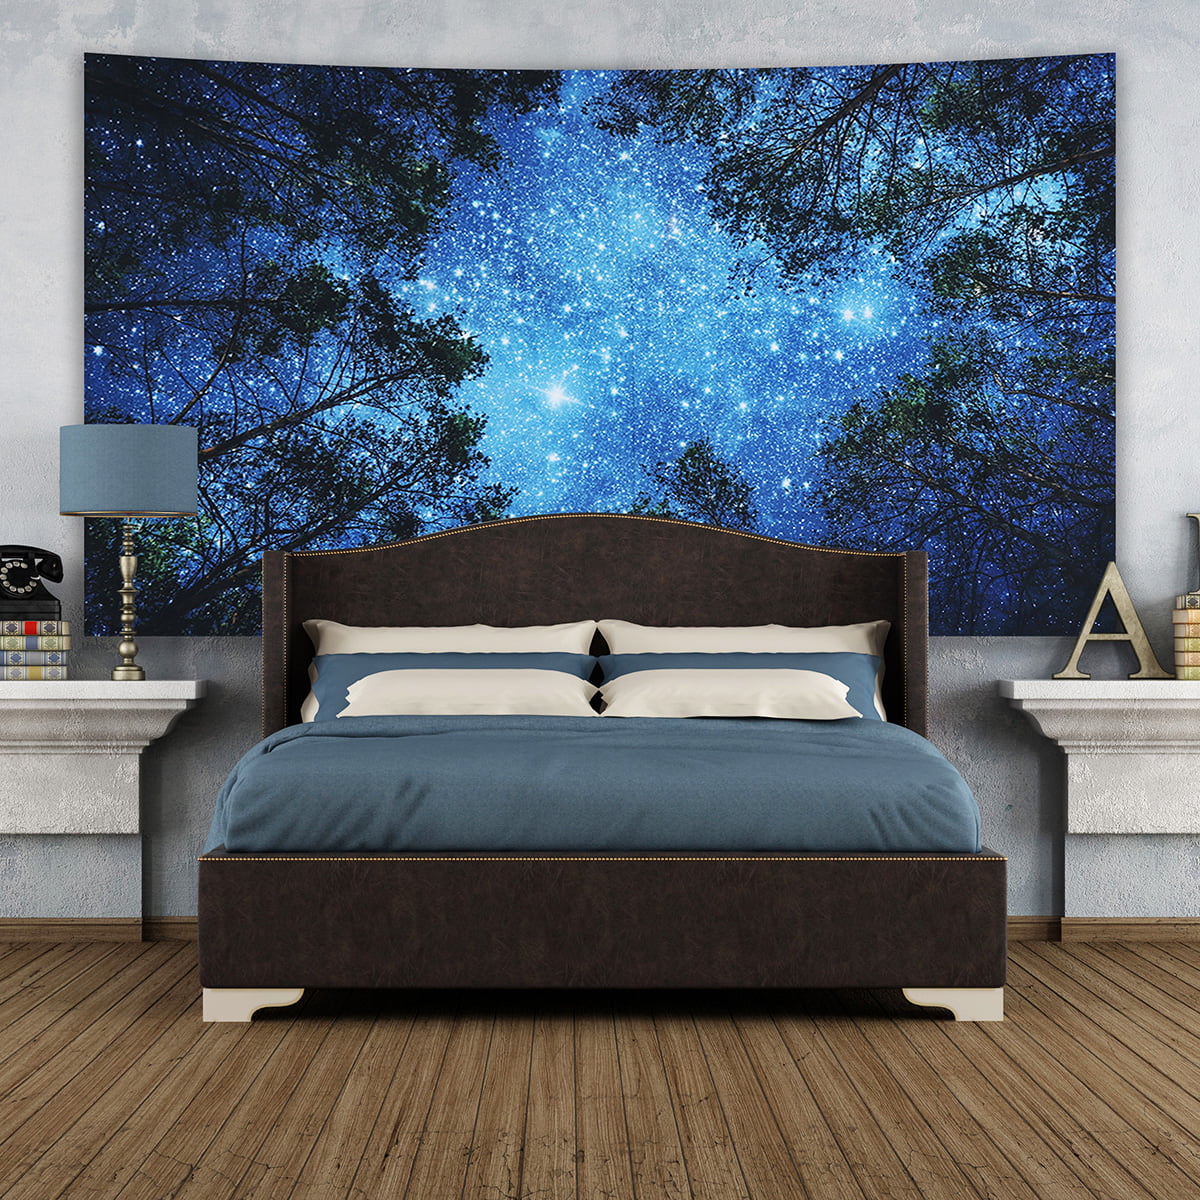 Home Energy Mandala Wall Hanging Night Galaxy Decor Tapestry Bedroom Decoration 